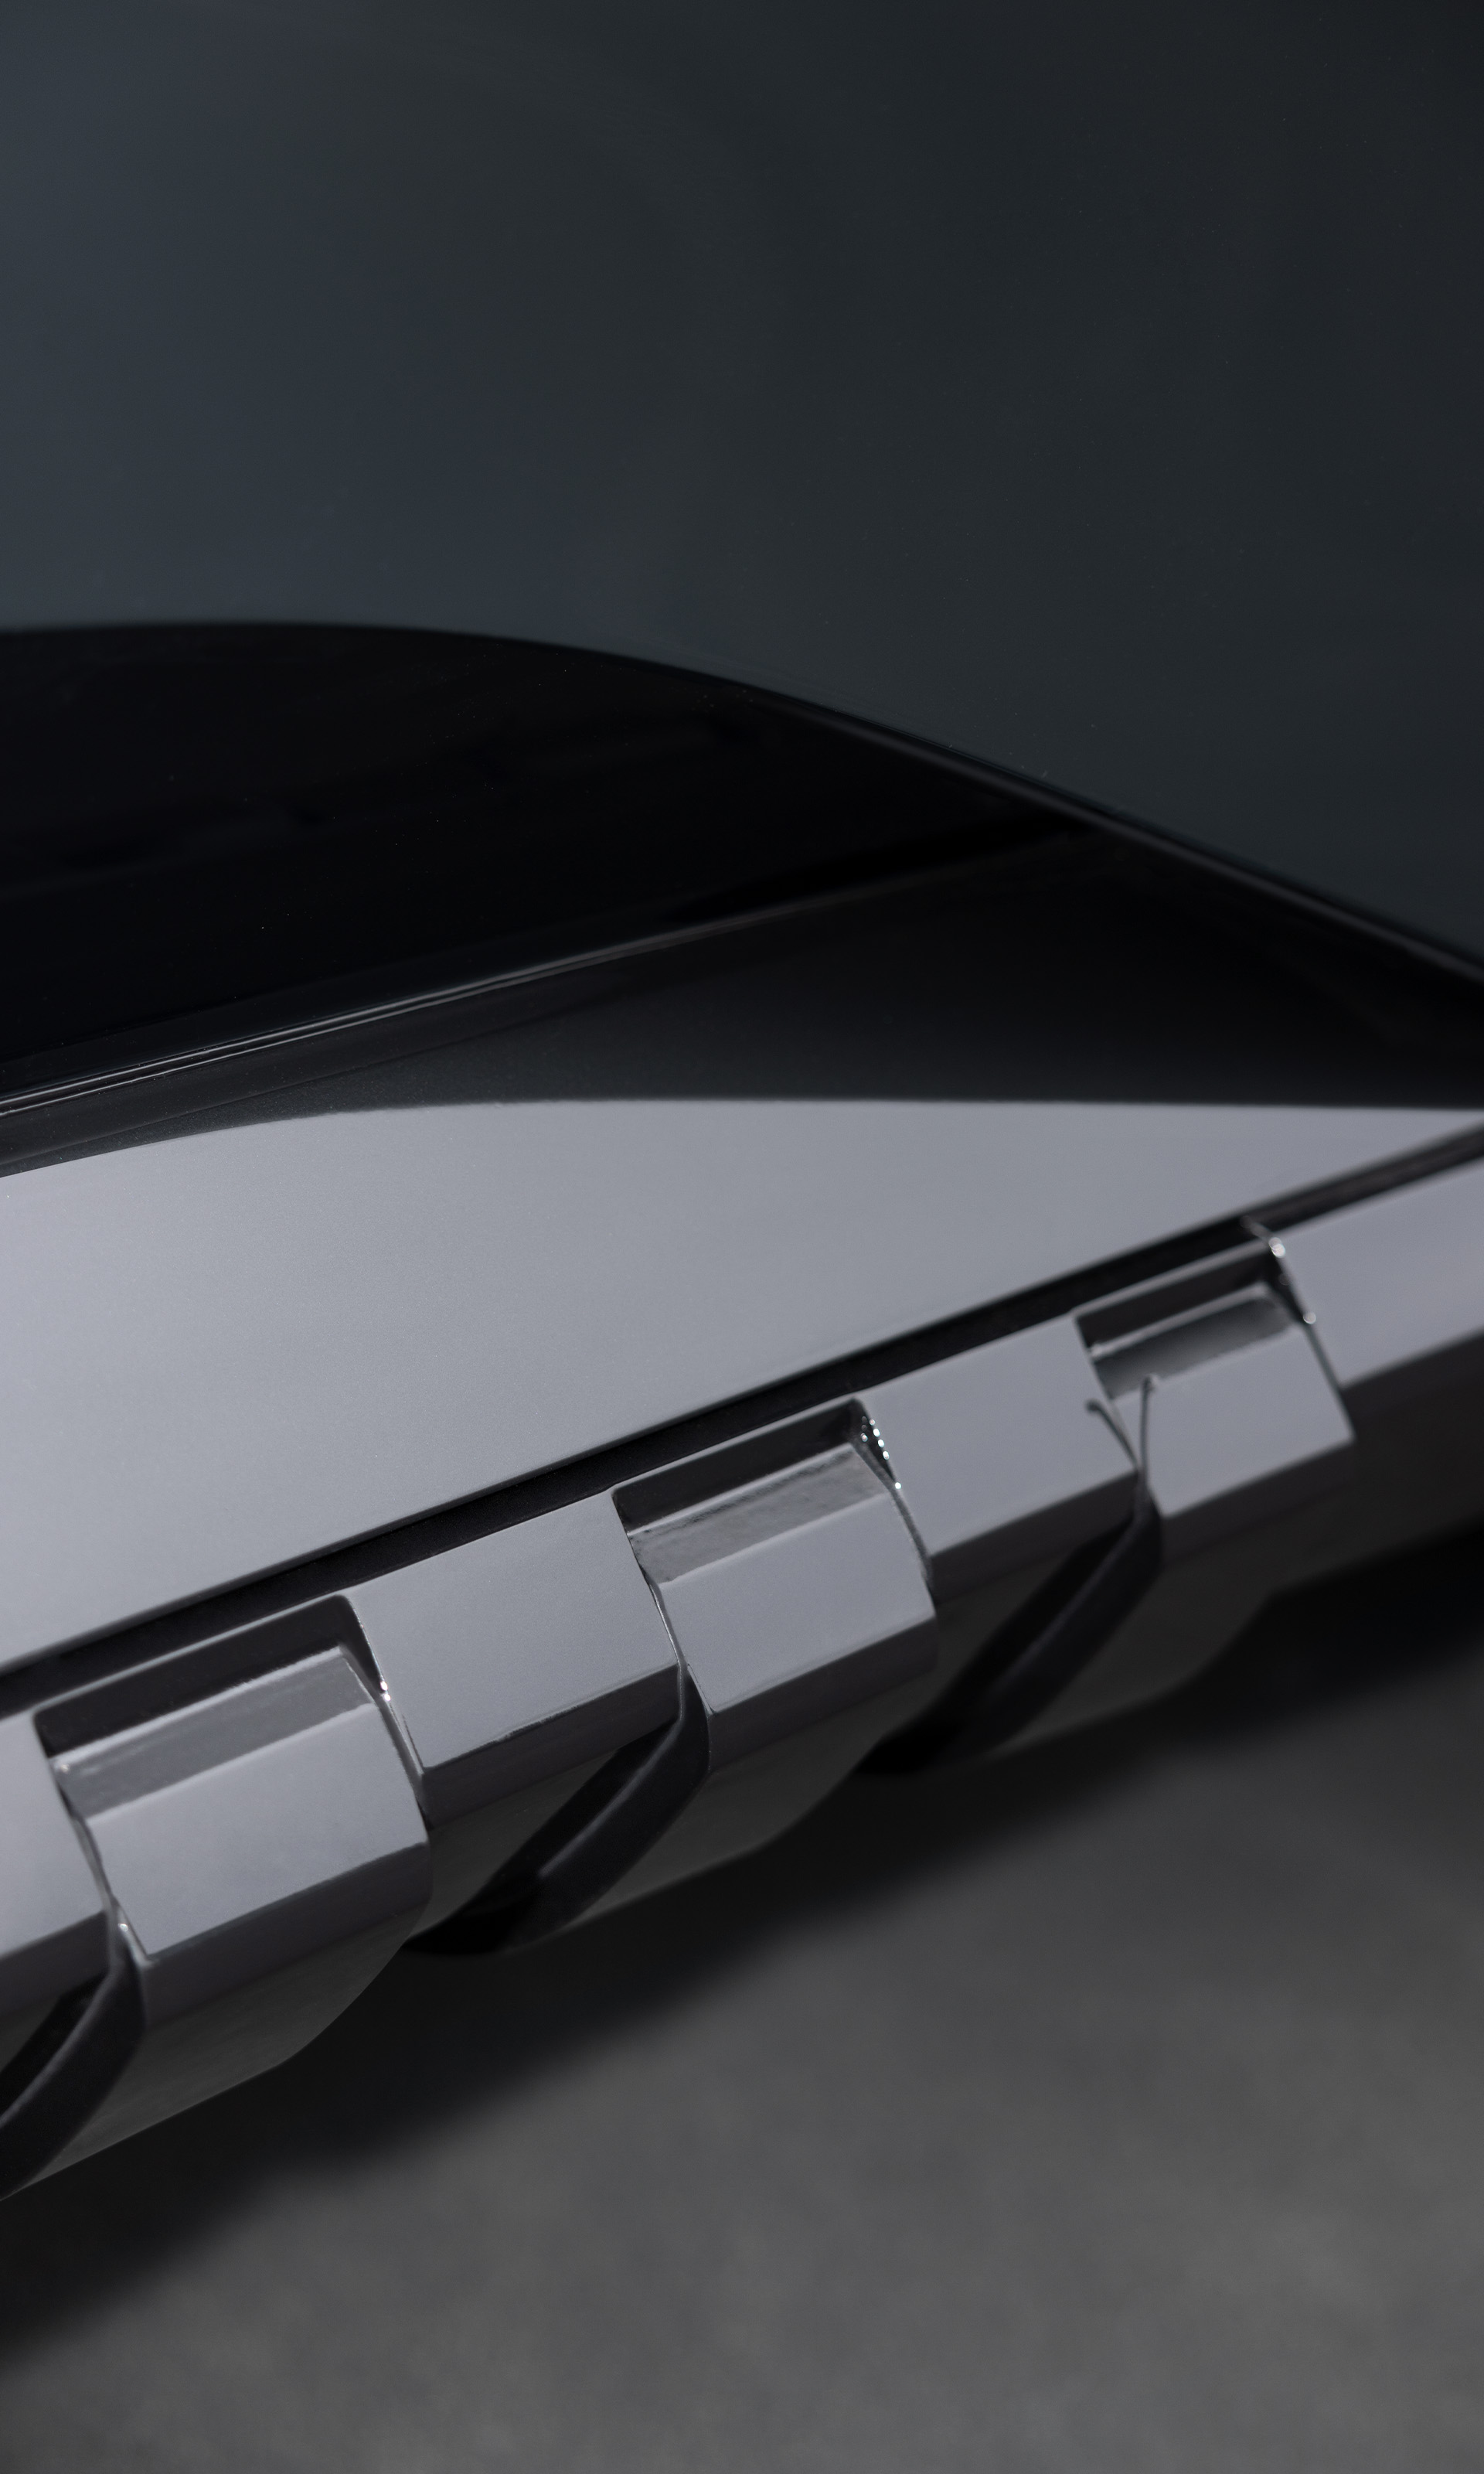  Detale konstrukcyjne koncepcji Audi activesphere.